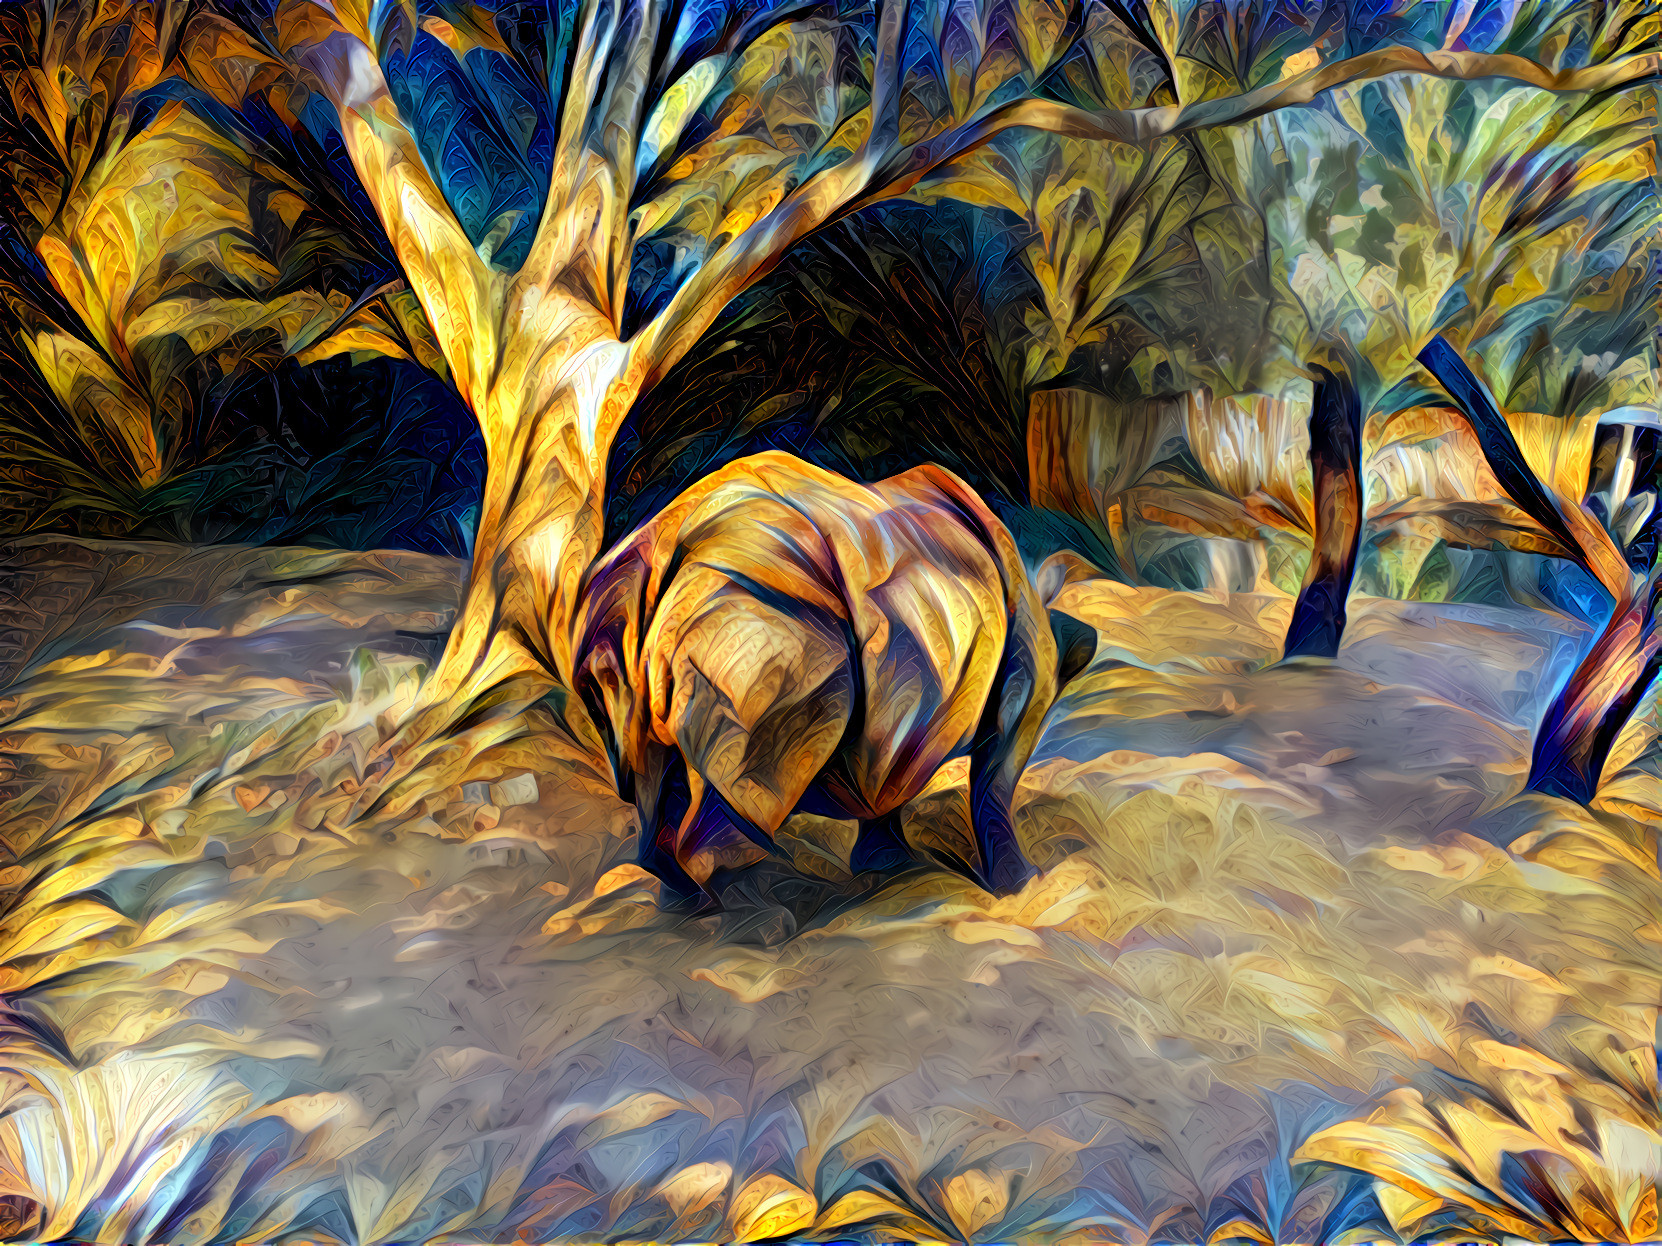 rhino my ass